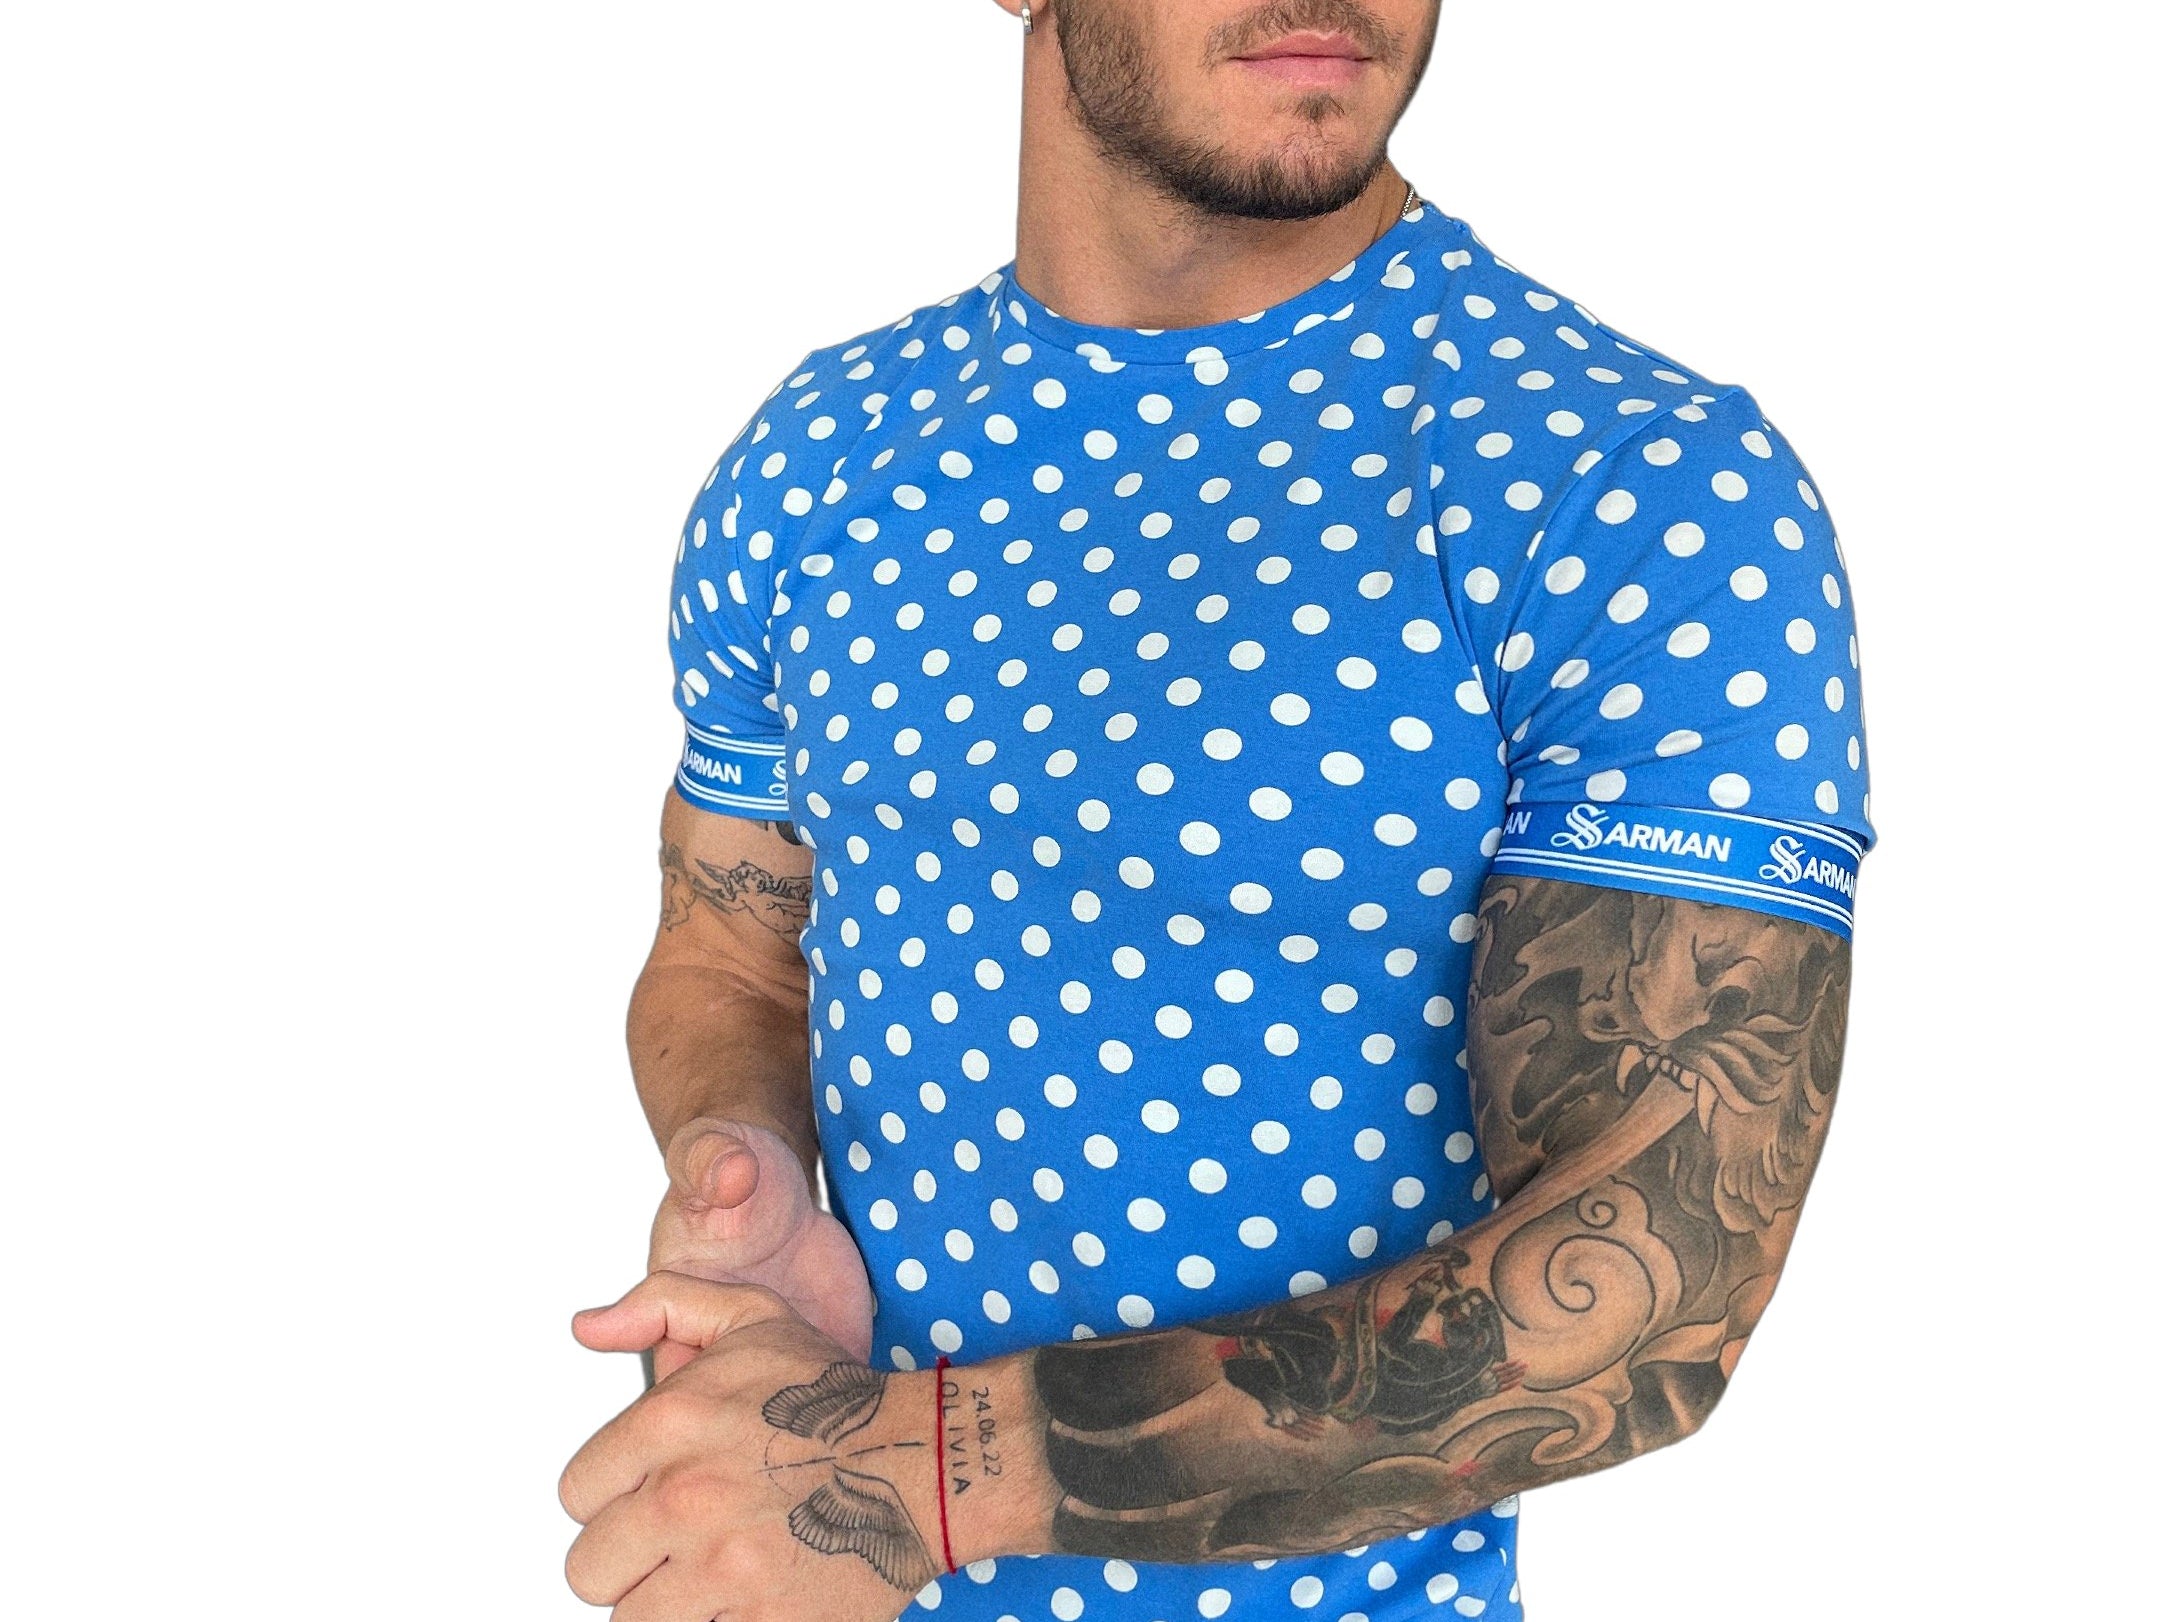 Garoshik - Blue T-shirt for Men - Sarman Fashion - Wholesale Clothing Fashion Brand for Men from Canada